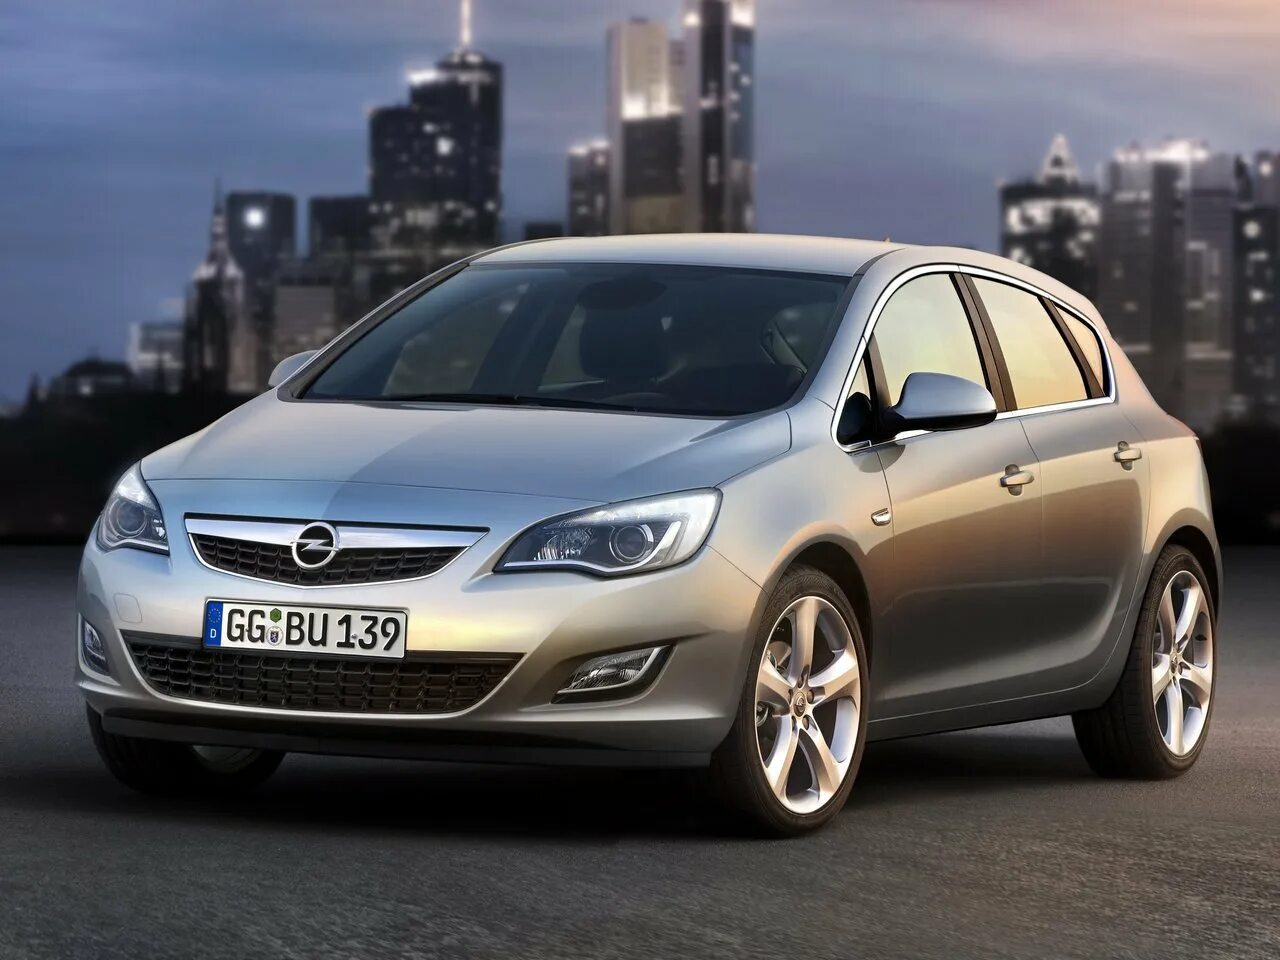 Opel Astra j. Opel Astra j 2010. Opel Astra j 2009. Opel Astra Hatchback. R opel